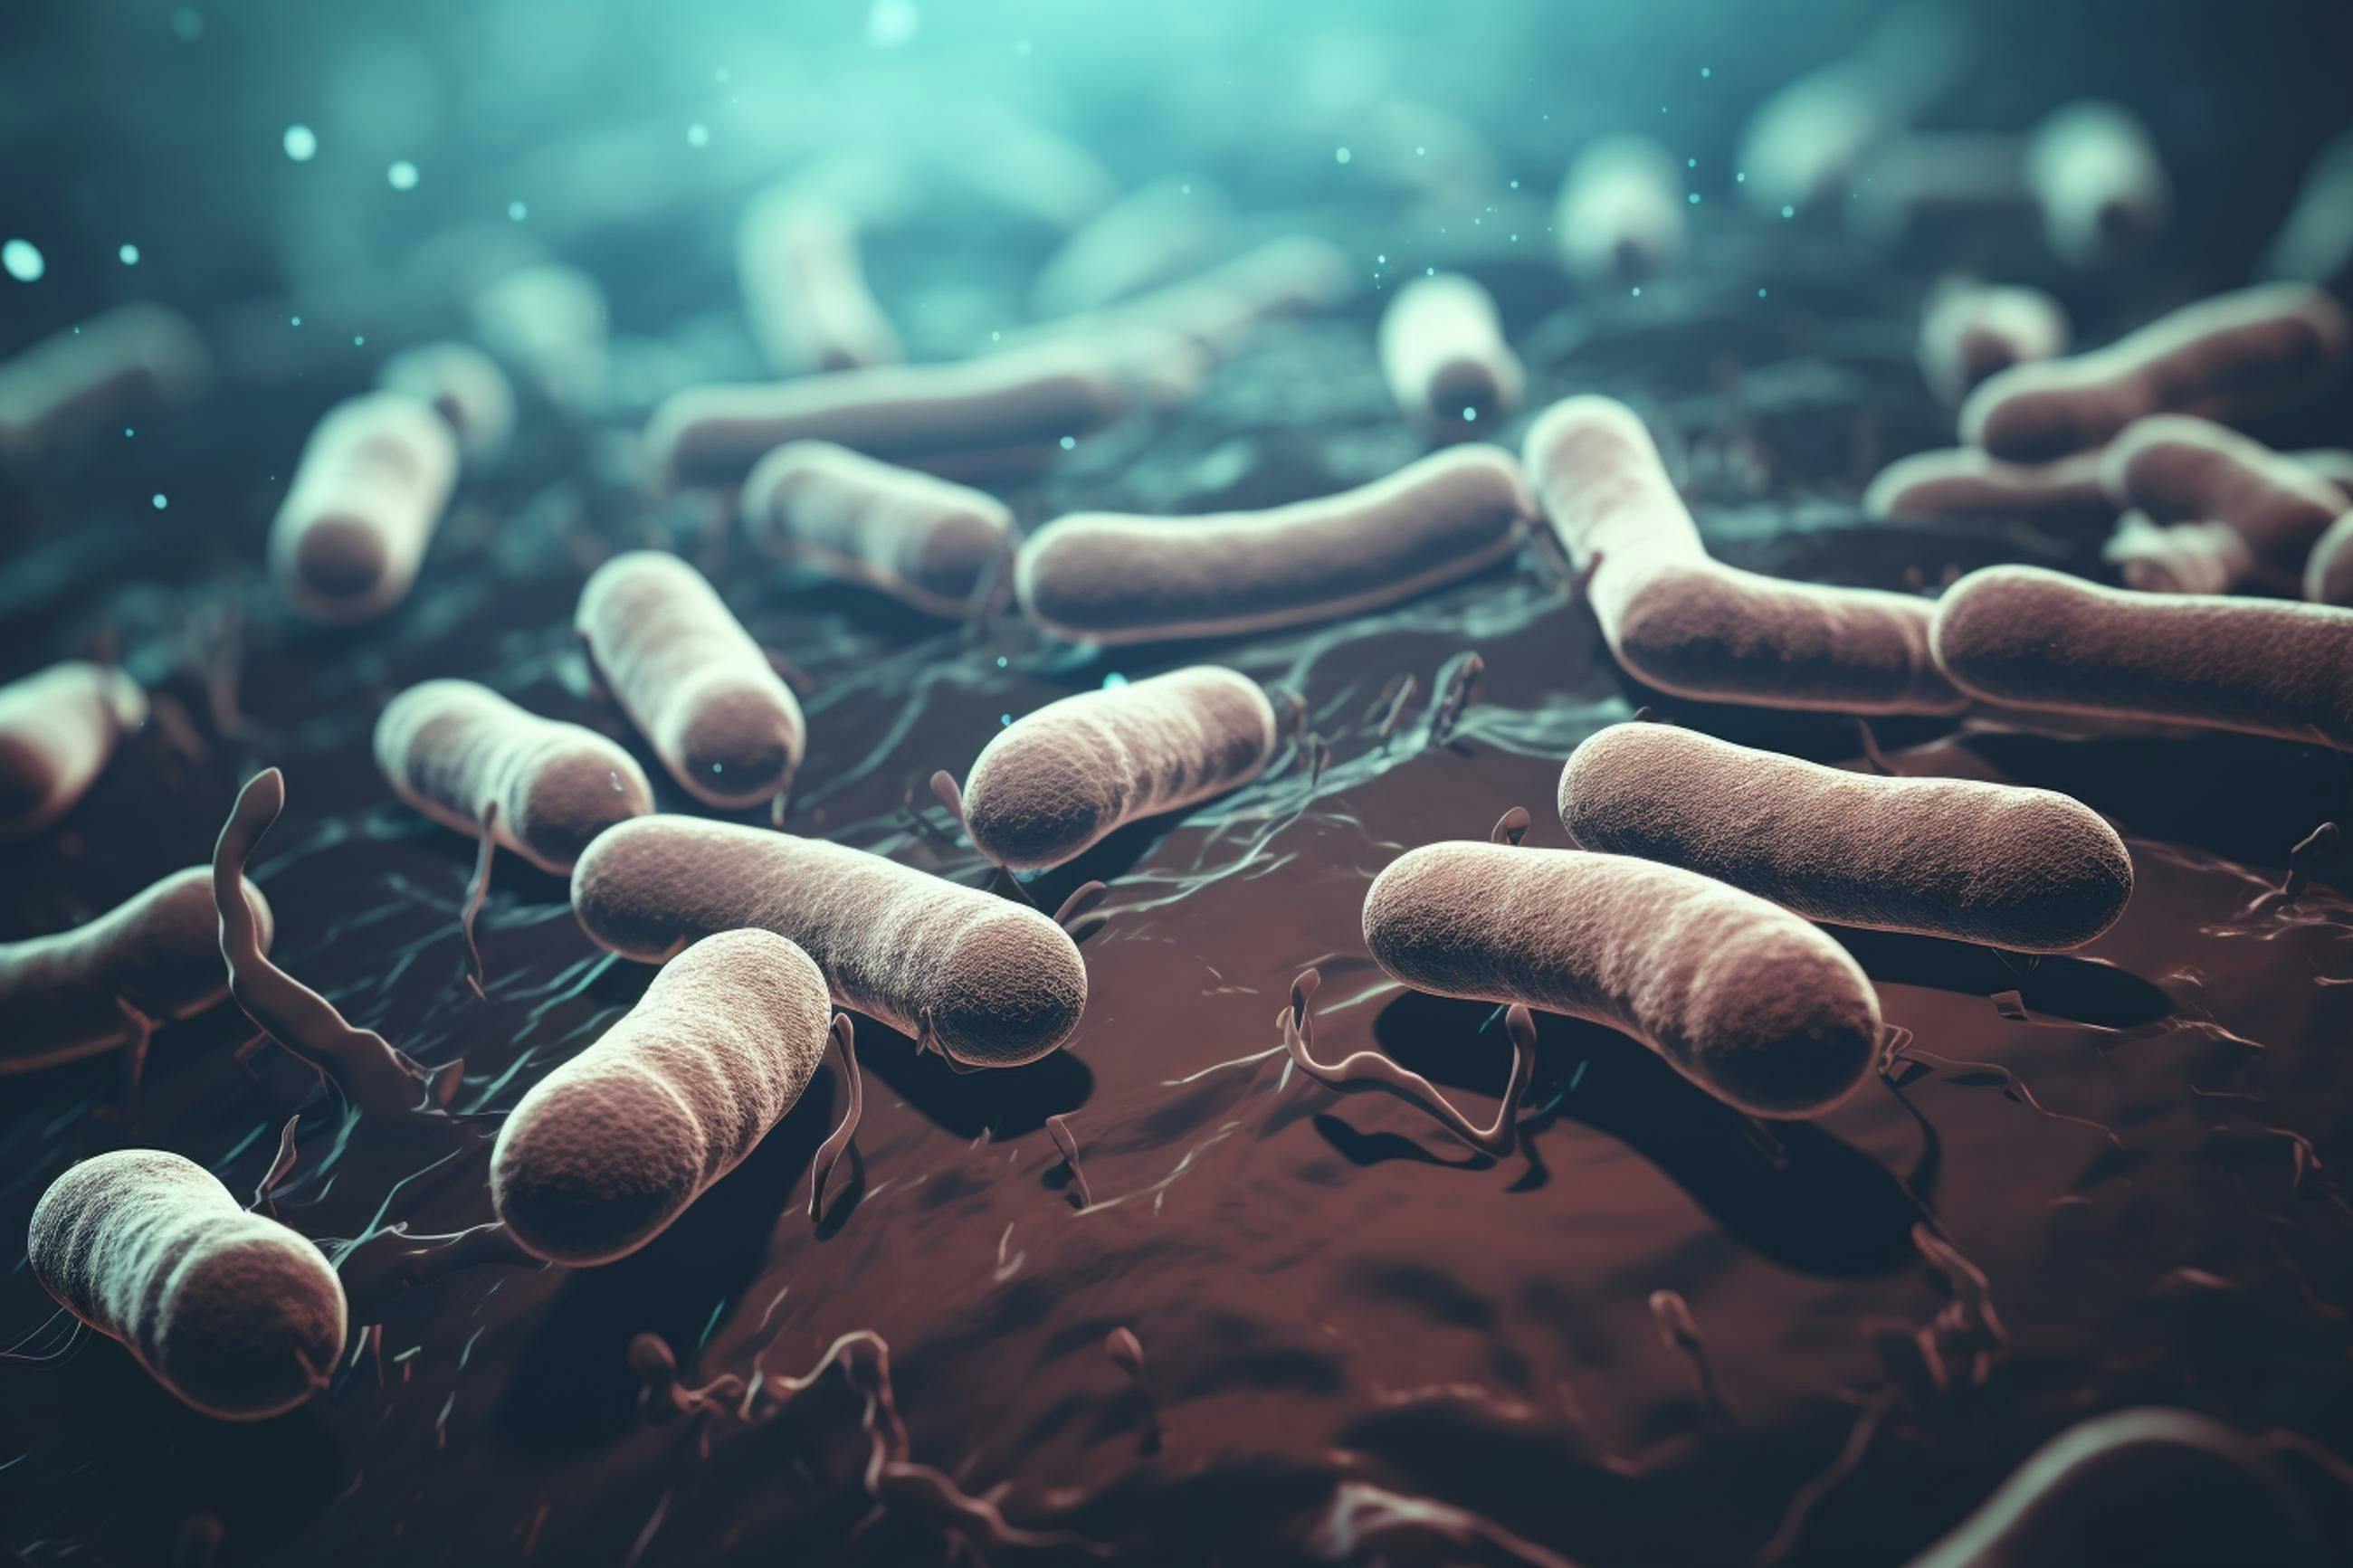 Illustration of harmful bacteria - E. coli or Salmonella, microscopic germs causing infections, gram-negative bacterium, scientific background. Credit: Jairo - stock.adobe.com